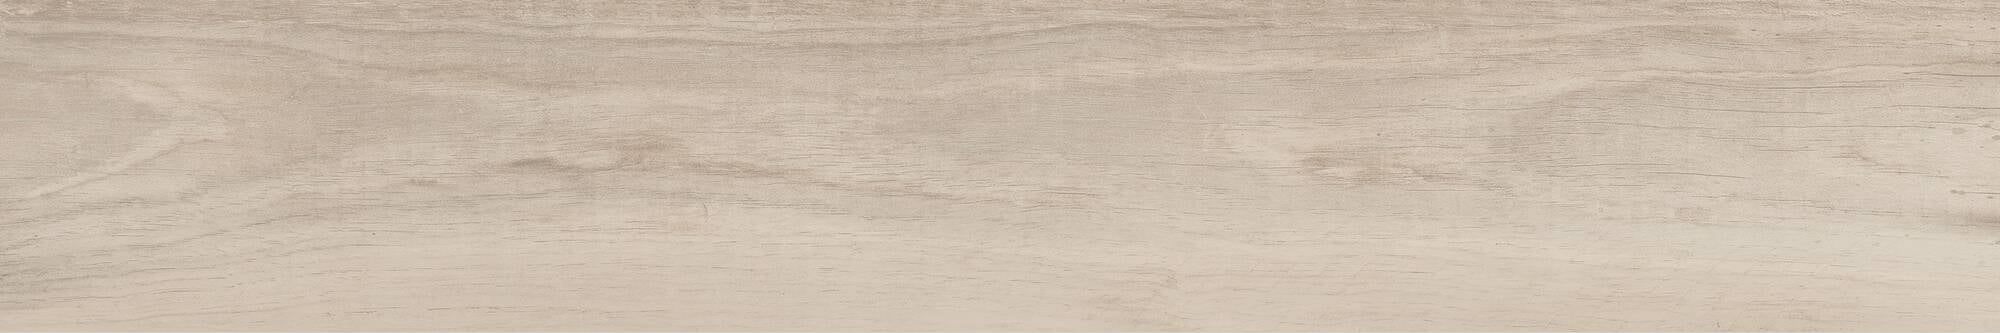 Terratinta Vloertegel Softwood 20x120x1 cm Honey 1 44M2